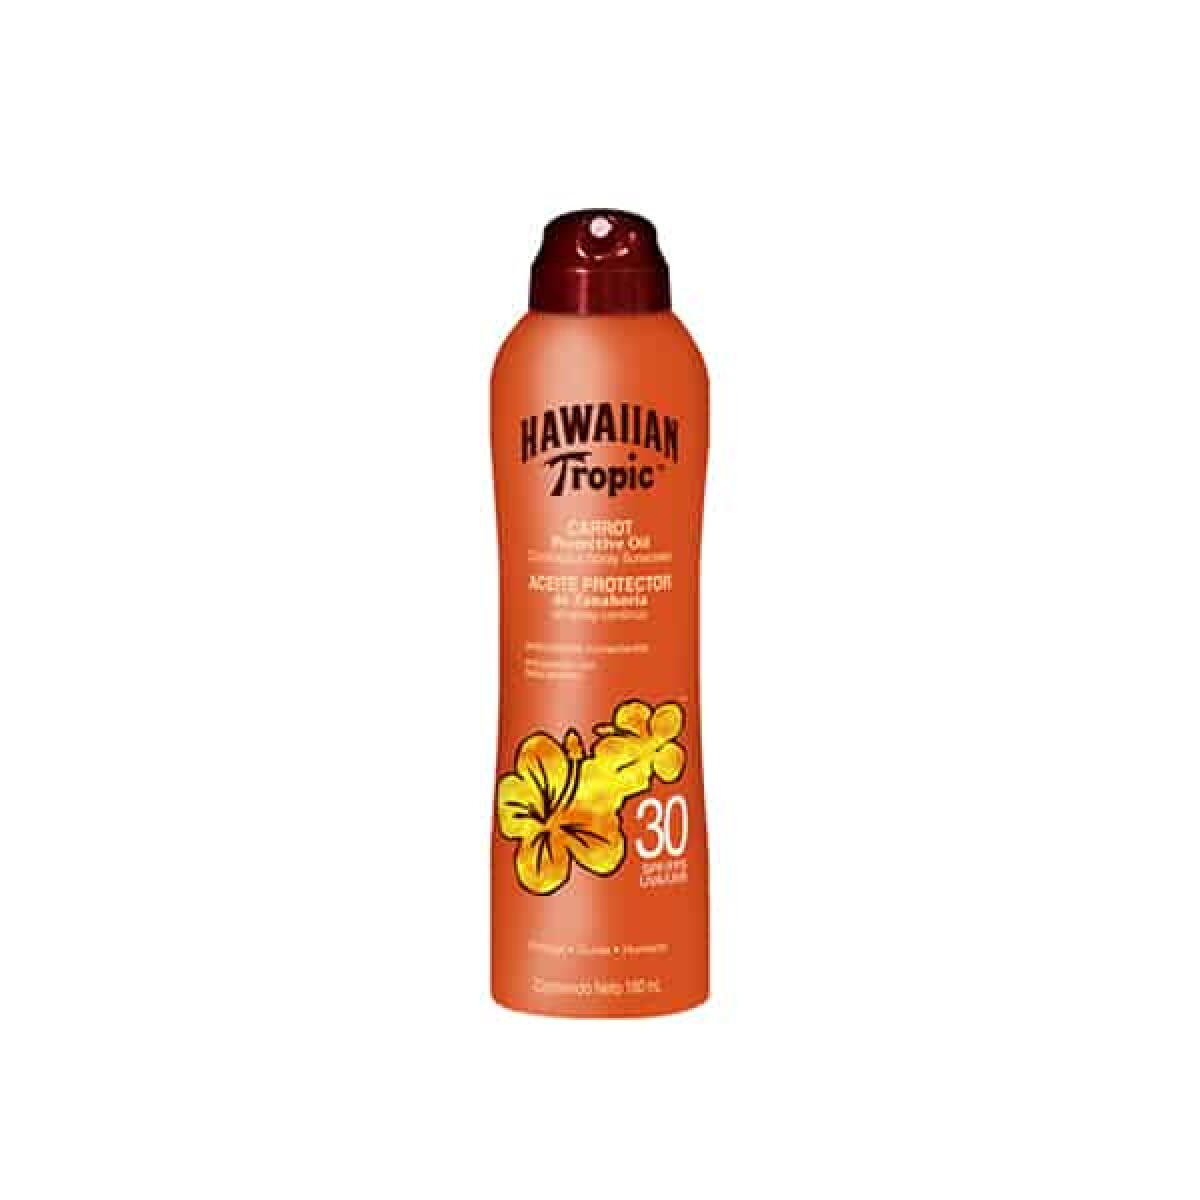 Haw Aceite Zanahoria Spray Continu F 